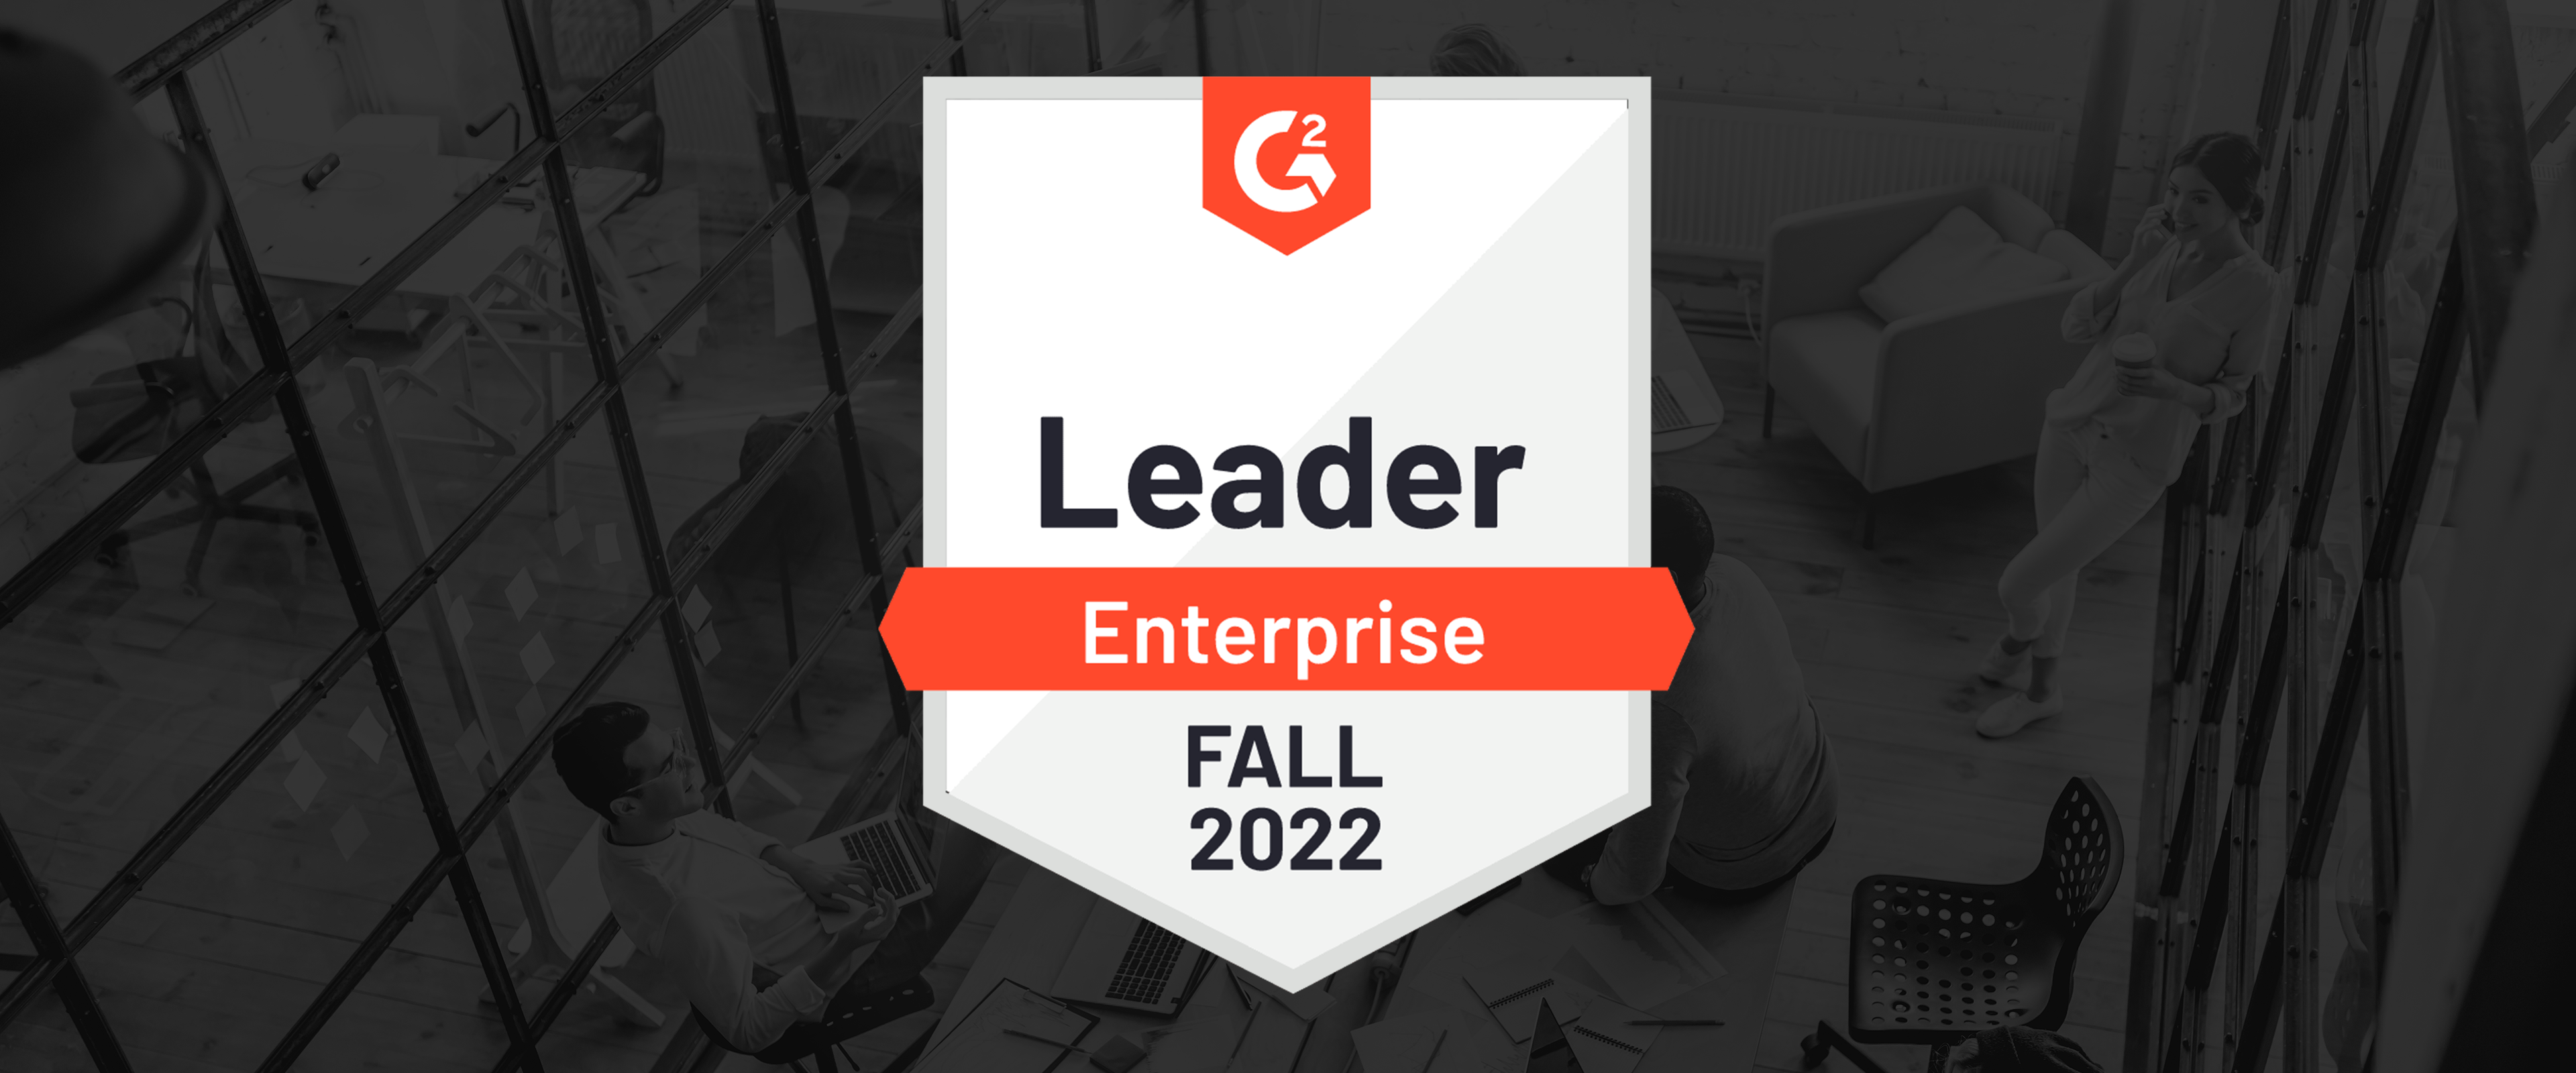 Kontent.ai named a Leader in Enterprise G2 Grid for Headless CMS